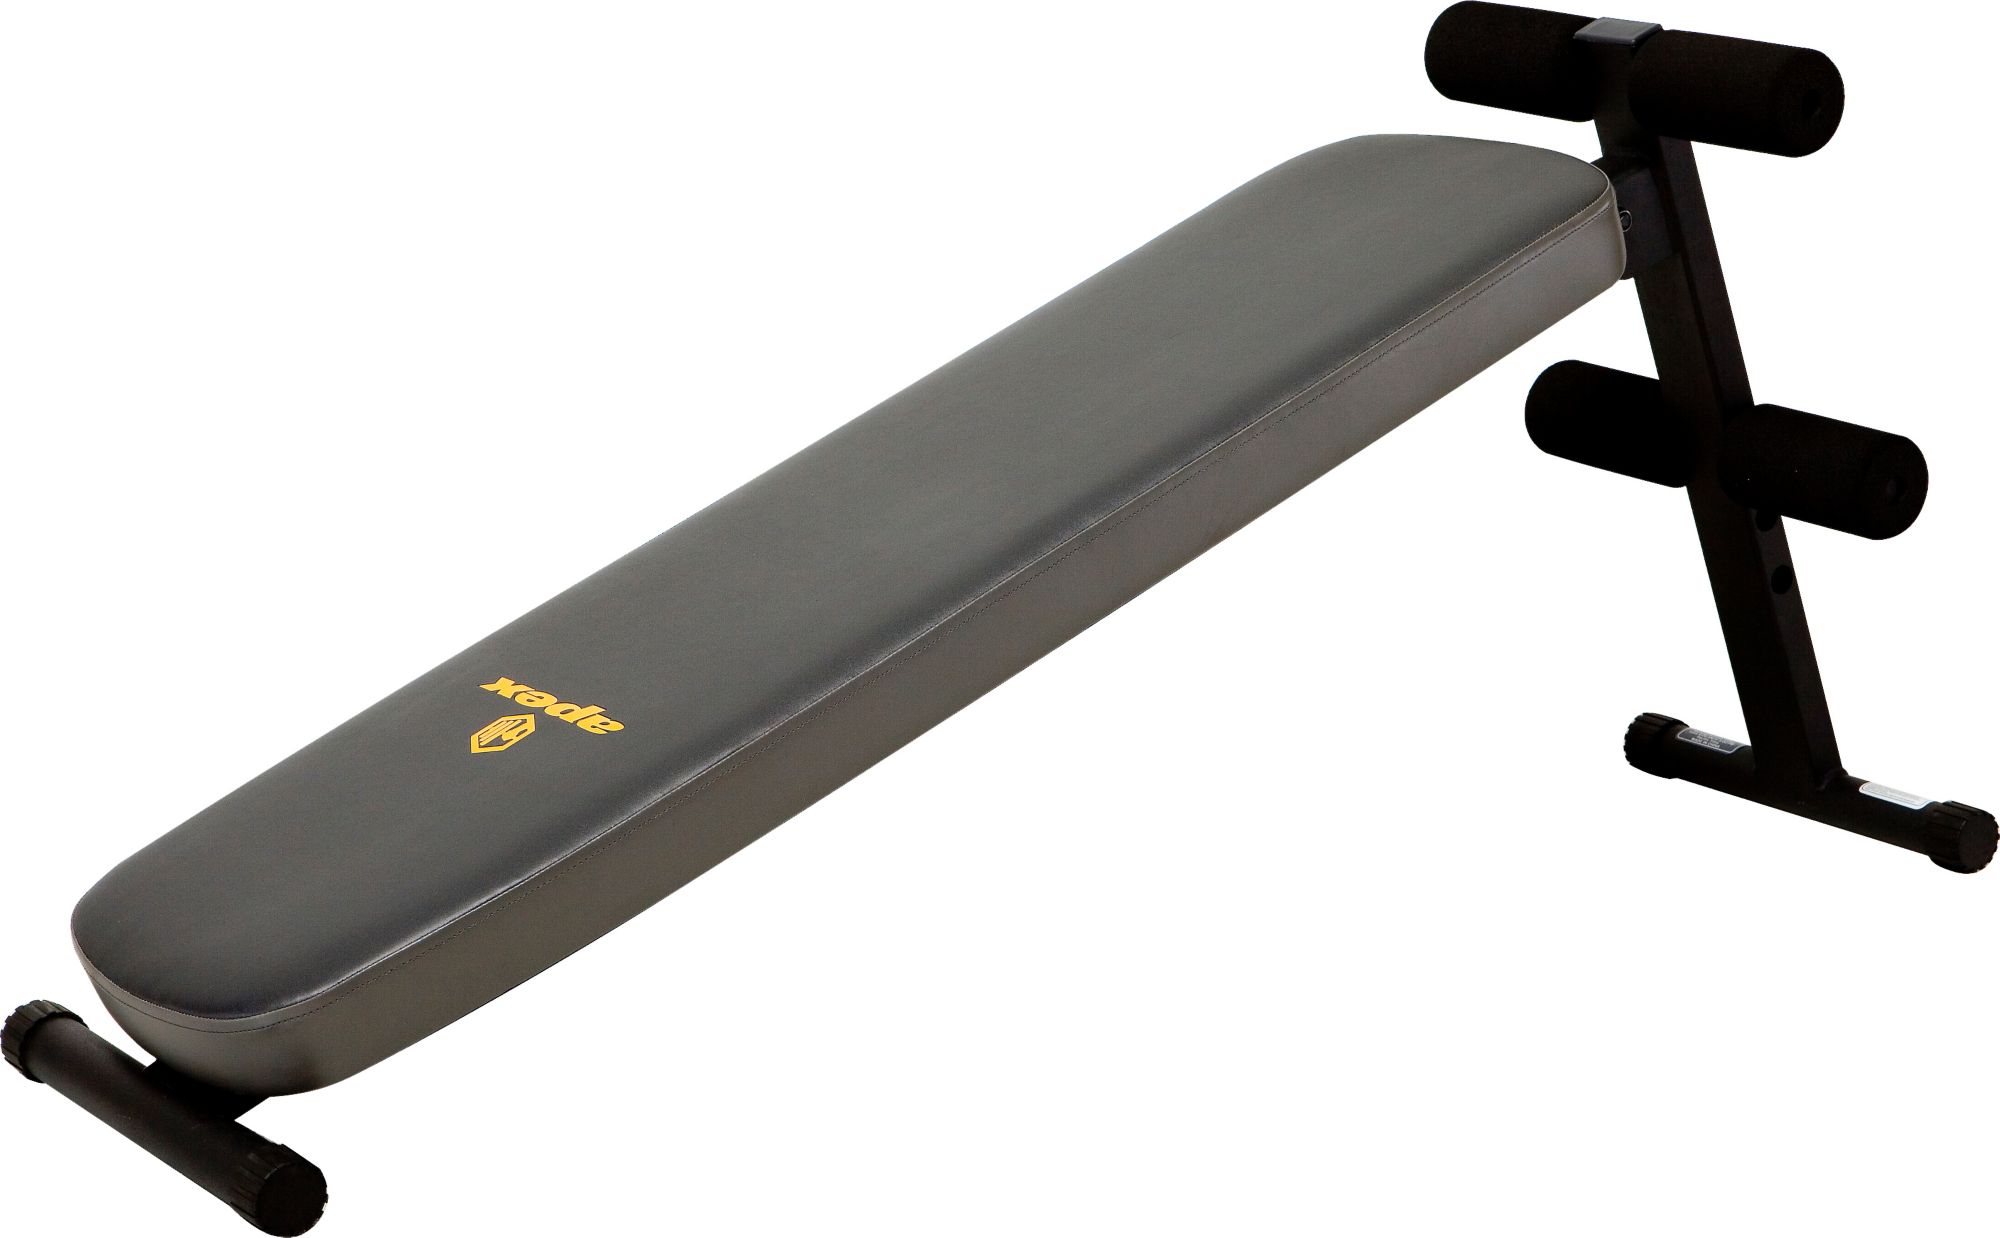 Apex Utility Slant Board Weight Bench